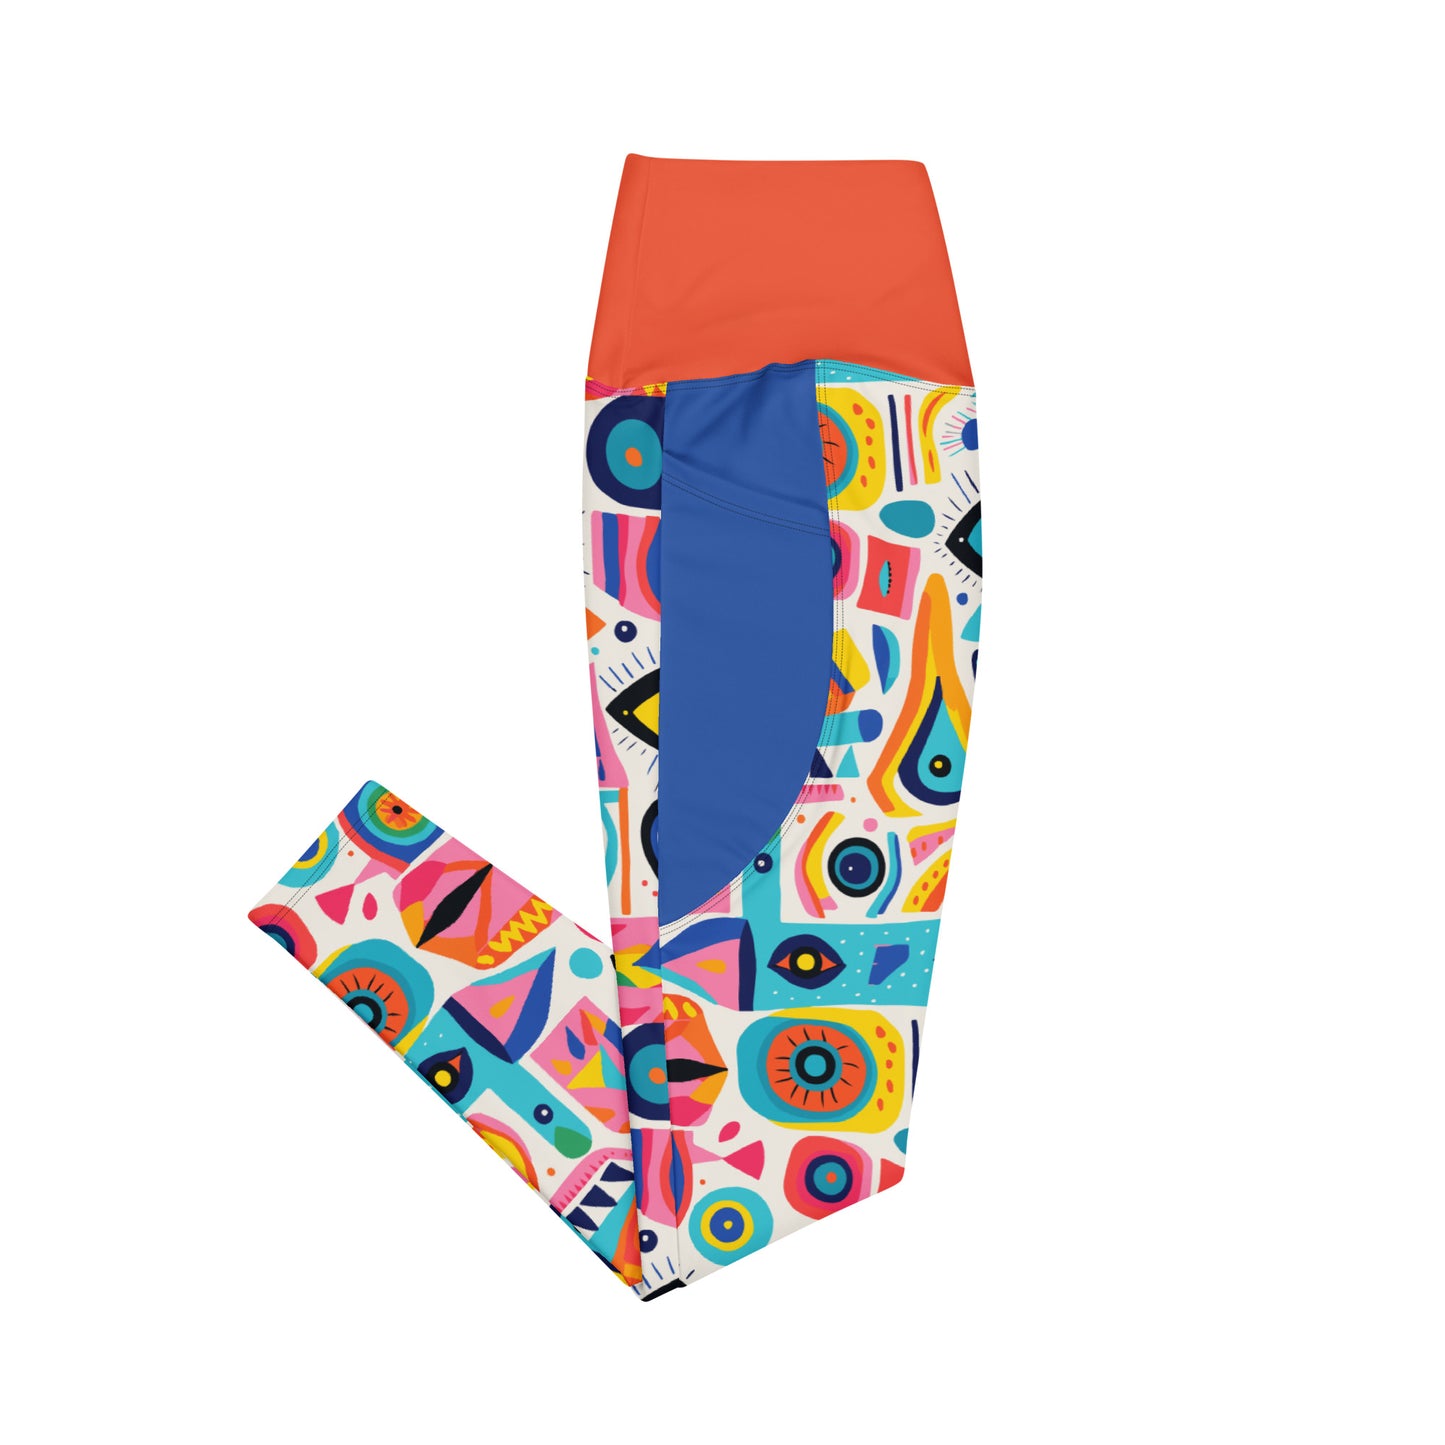 Ojos High Waist 7/8 Recycled Yoga Leggings / Yoga Pants with Pockets